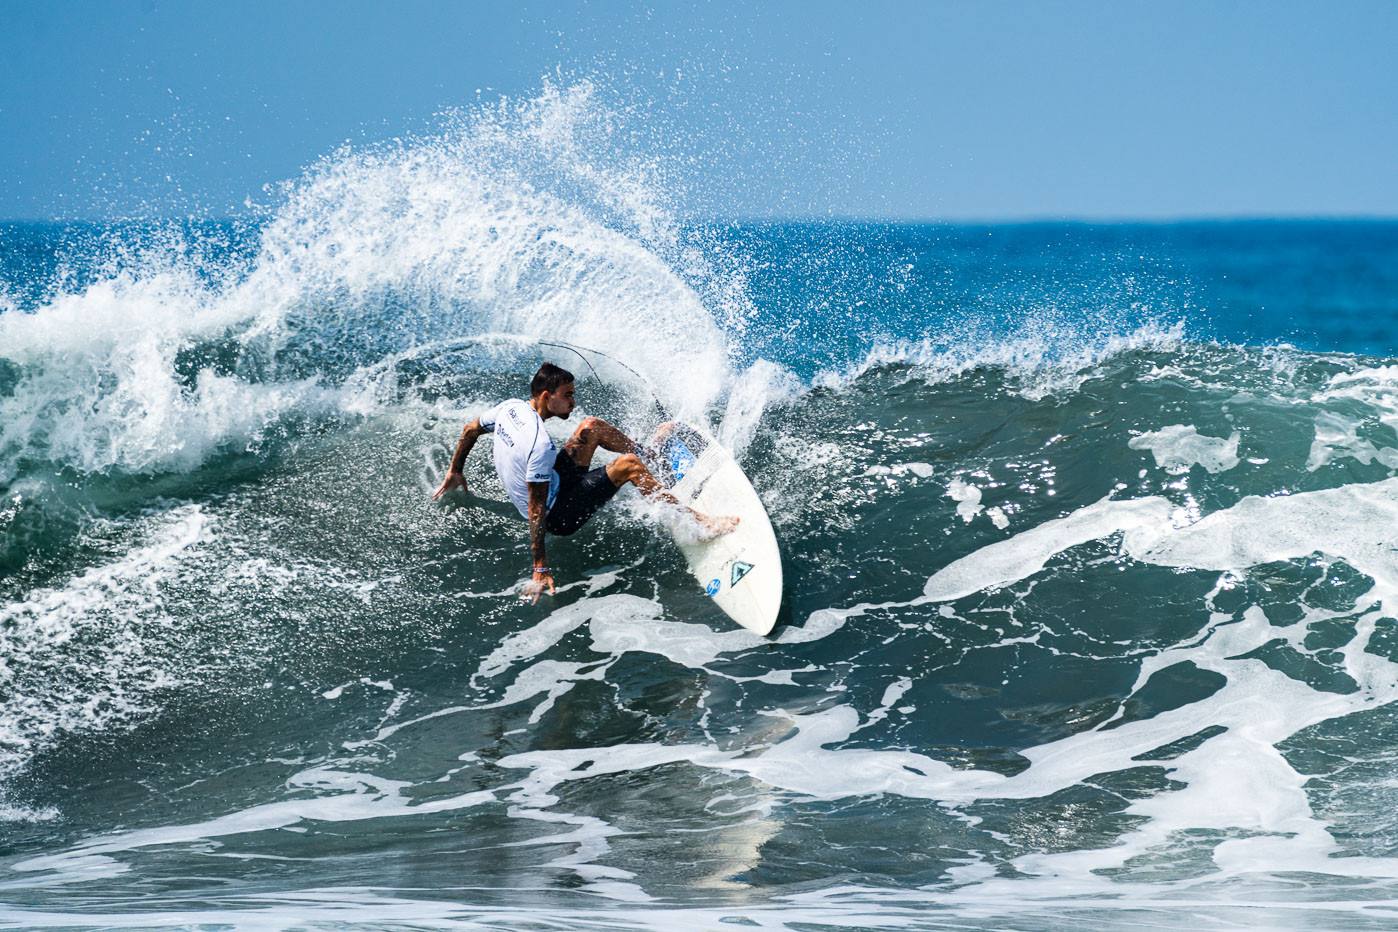 El Salvador is hosting this year's World Surfing Games ©ISA/Sean Evans